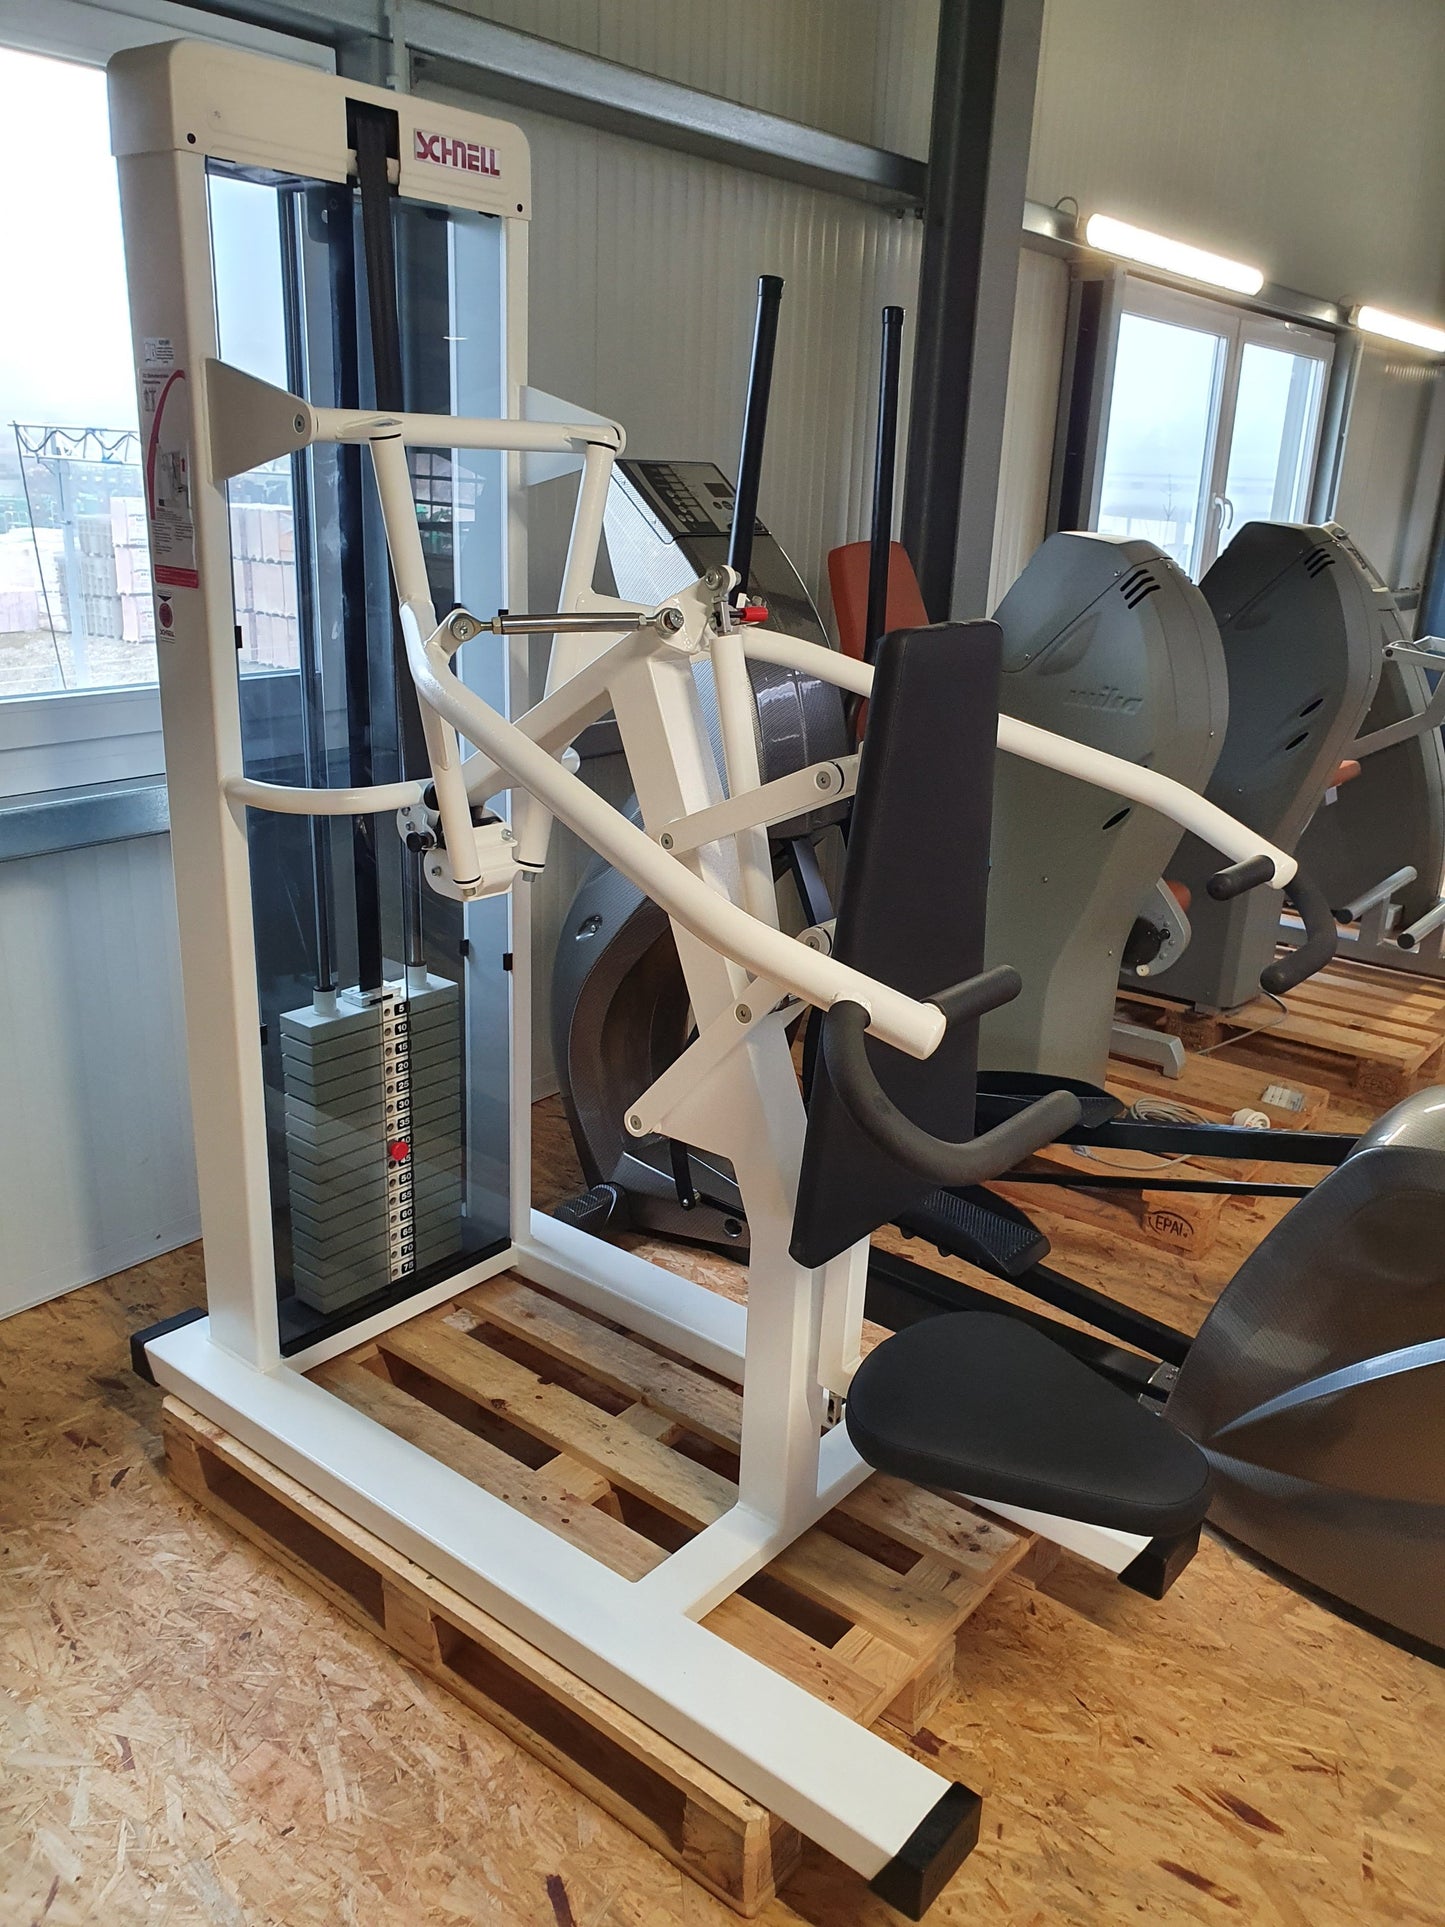 PROFI SCHNELL 3D Schulter Drückmaschine UNIKAT Fitness Studio Gym Fitness-Inserate.de